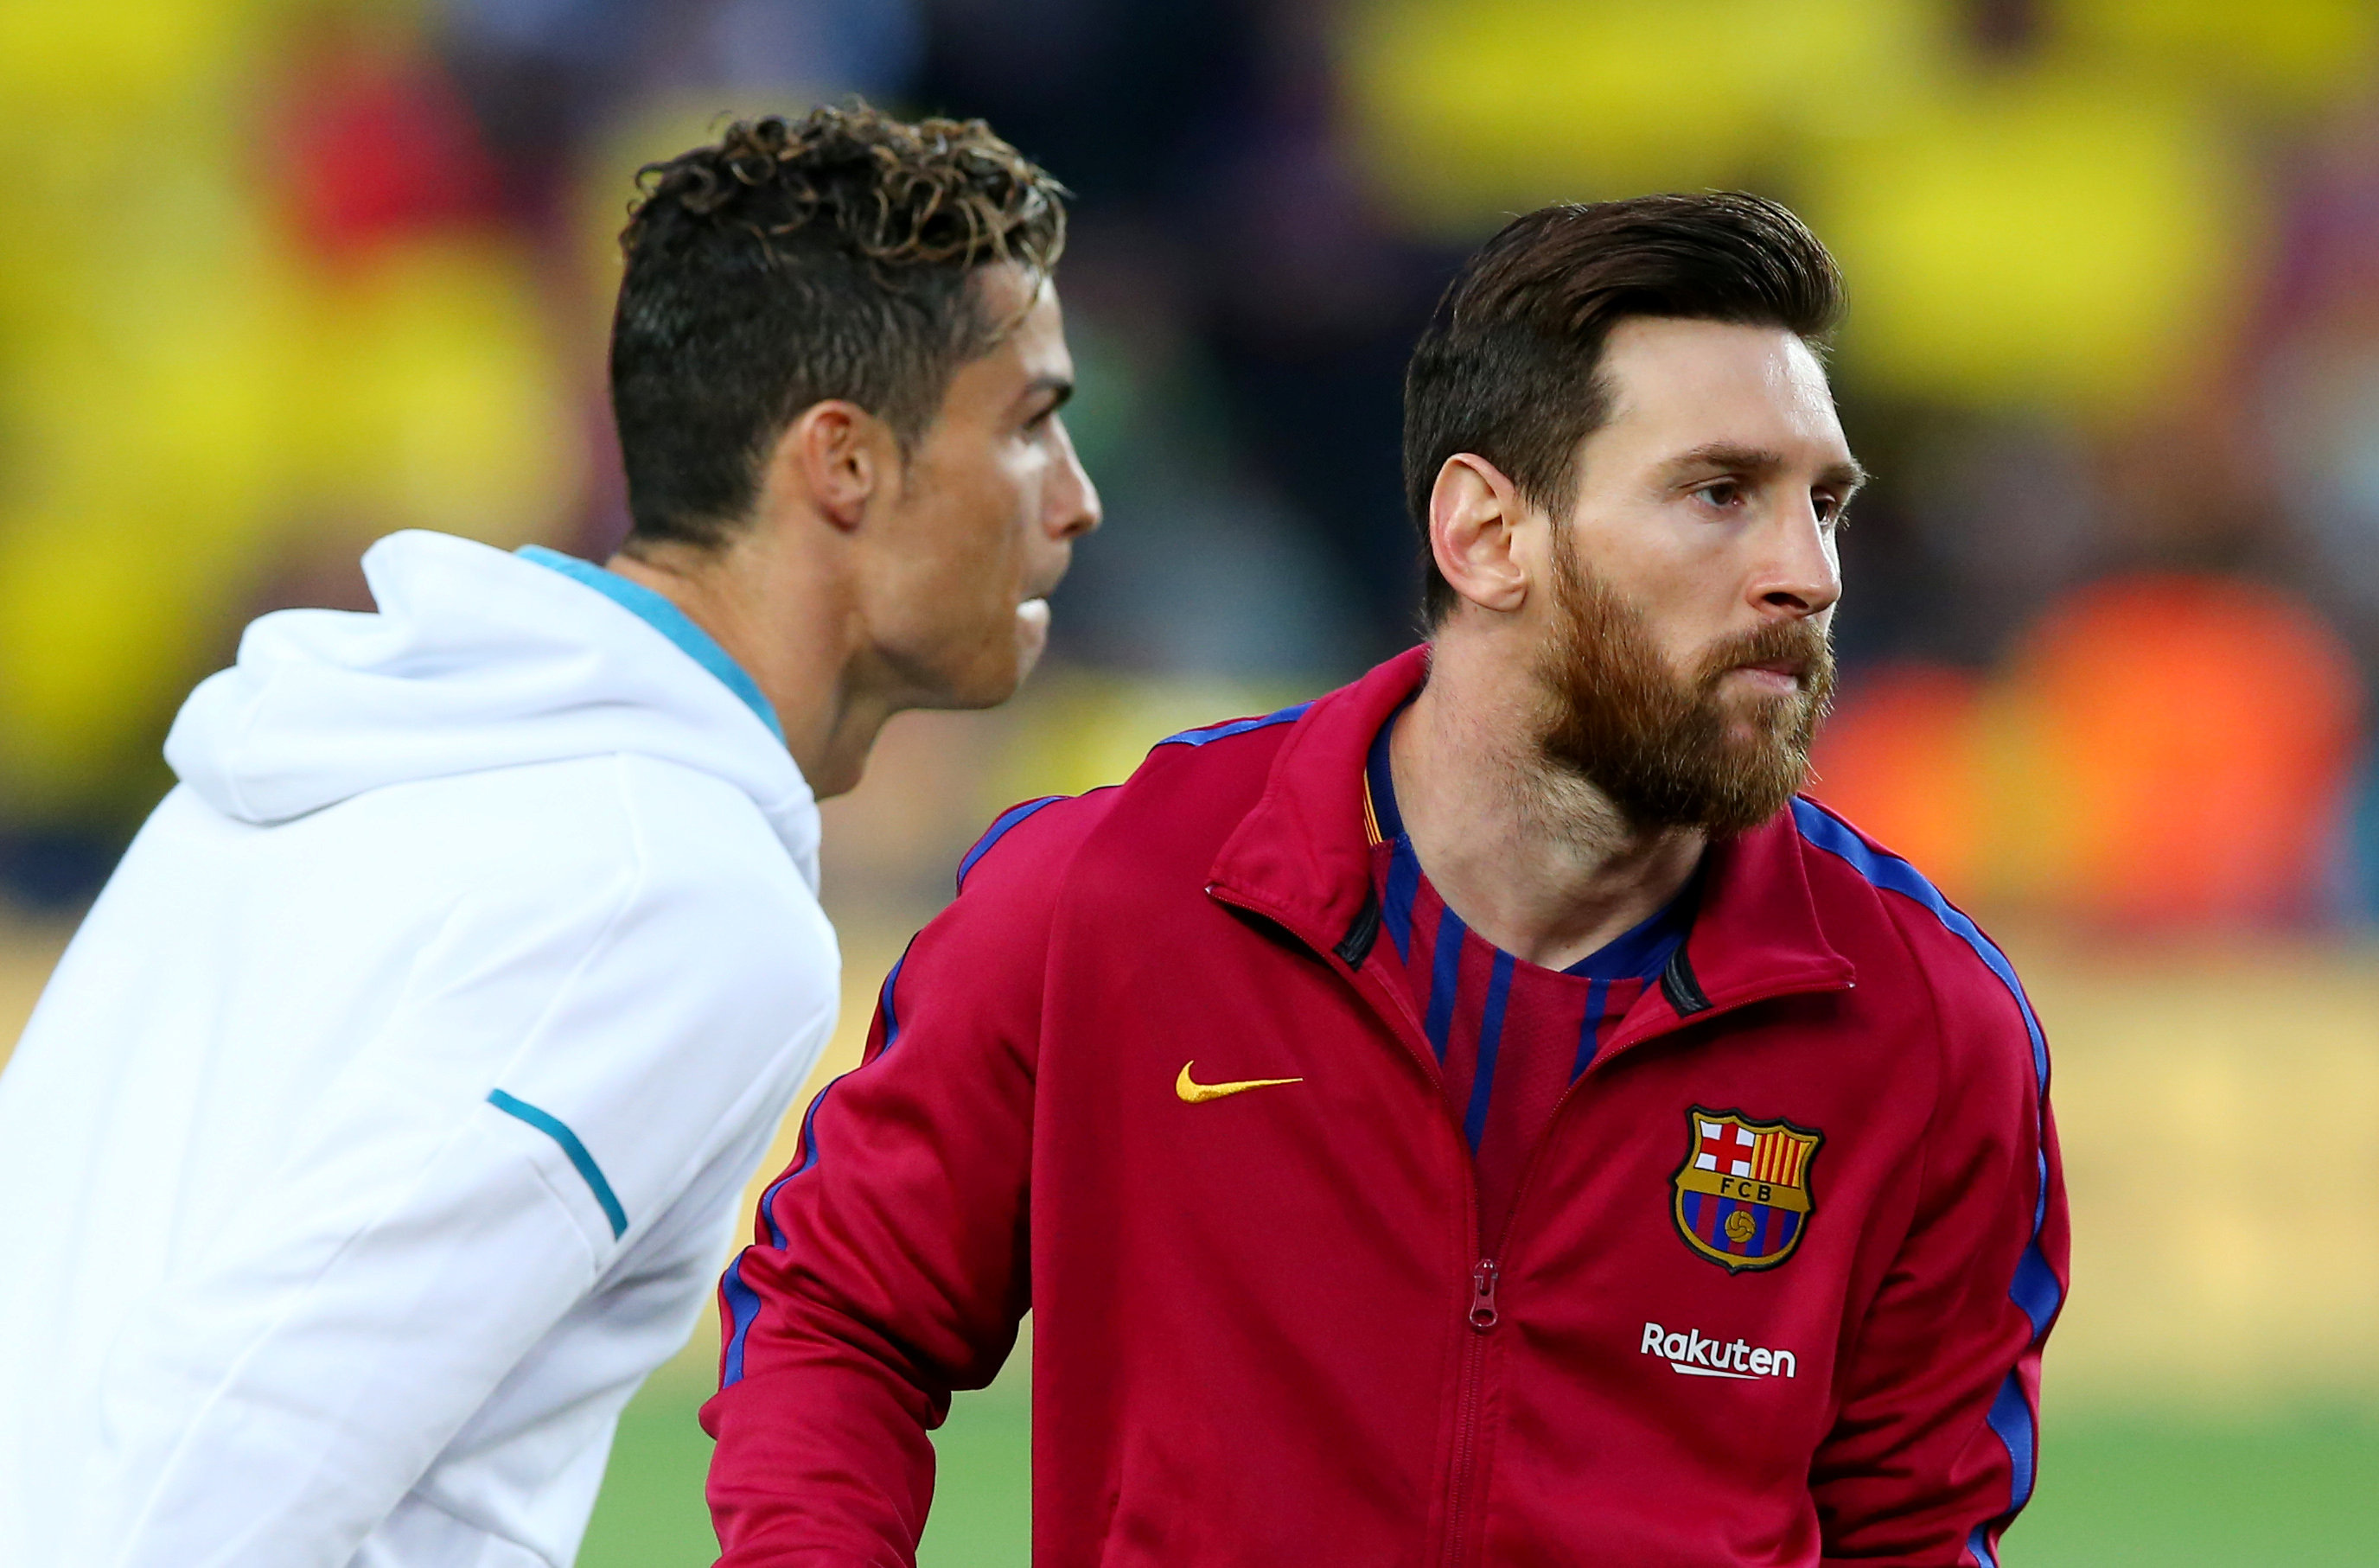 2017 Lionel Messi HD Images 9  Messi vs ronaldo, Messi and ronaldo, Messi  vs